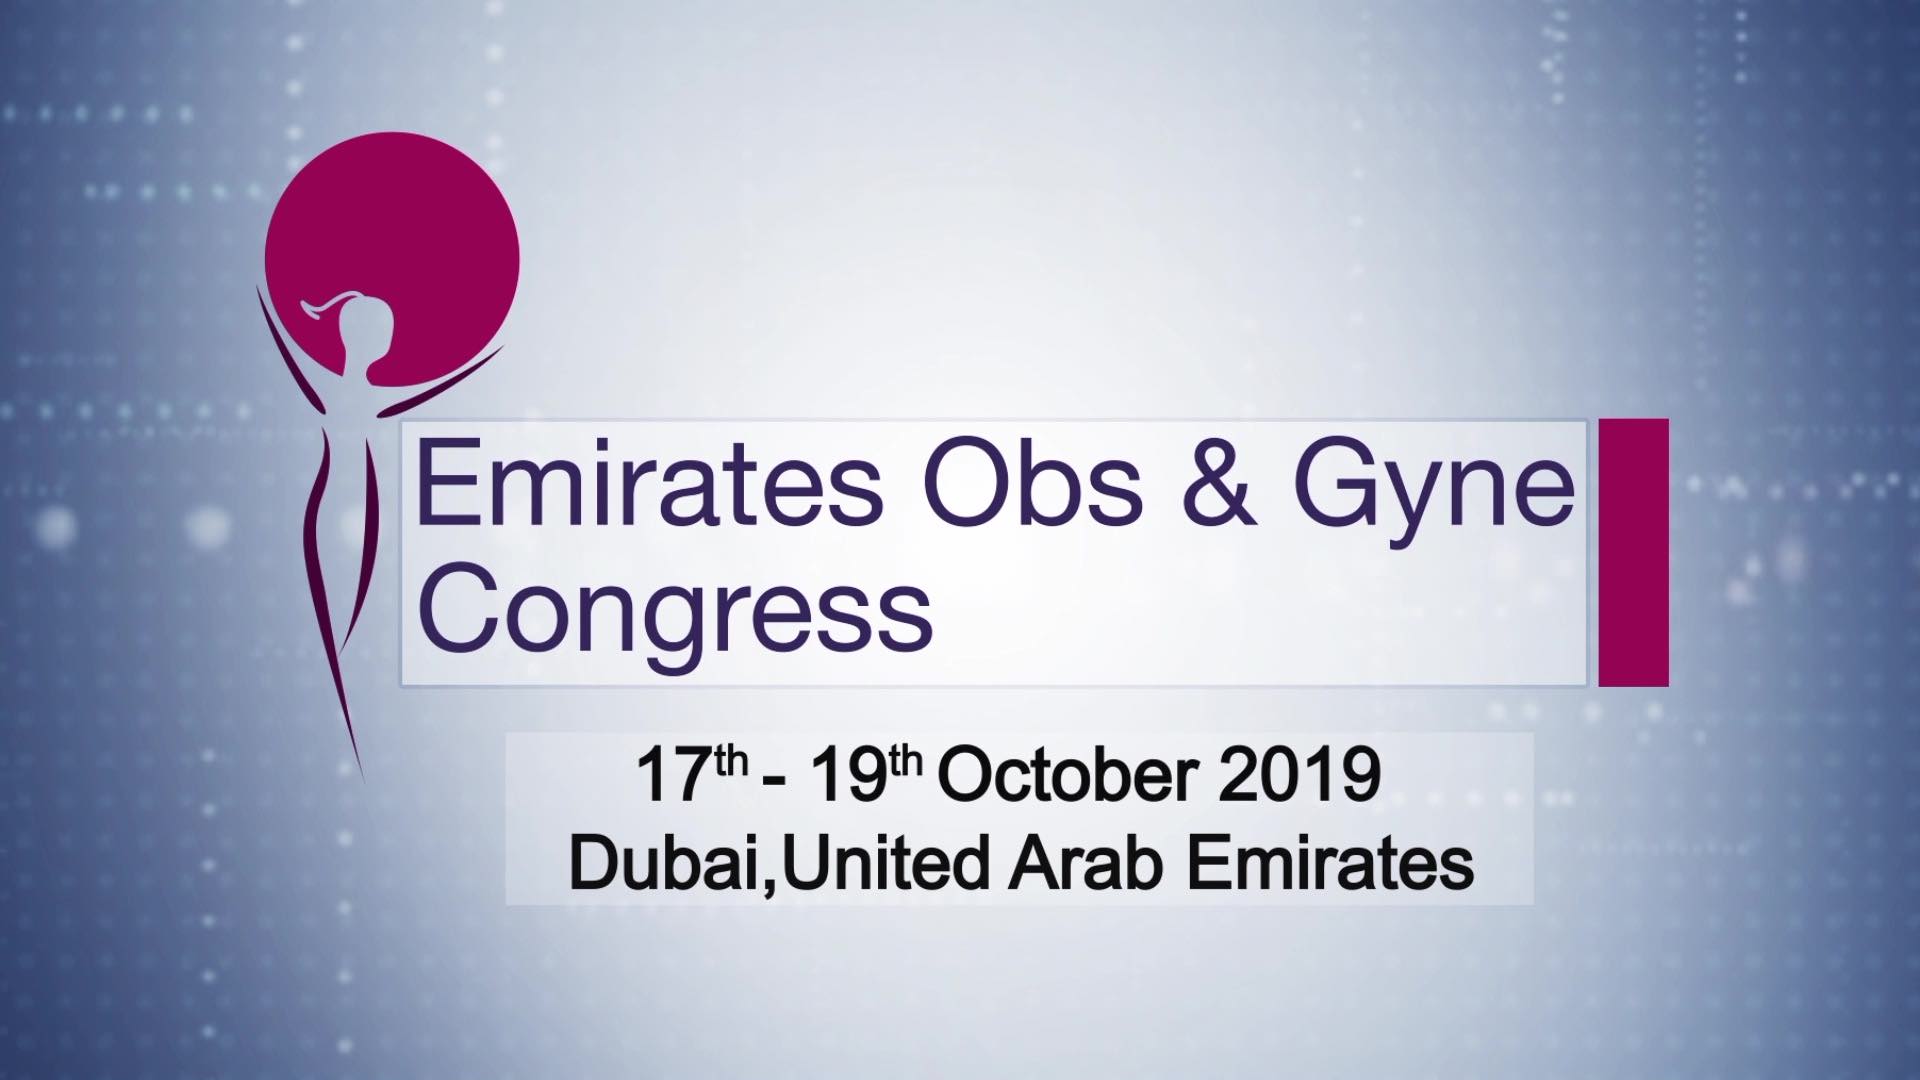 Emirates Obs & Gyne Congress Dubai 2019